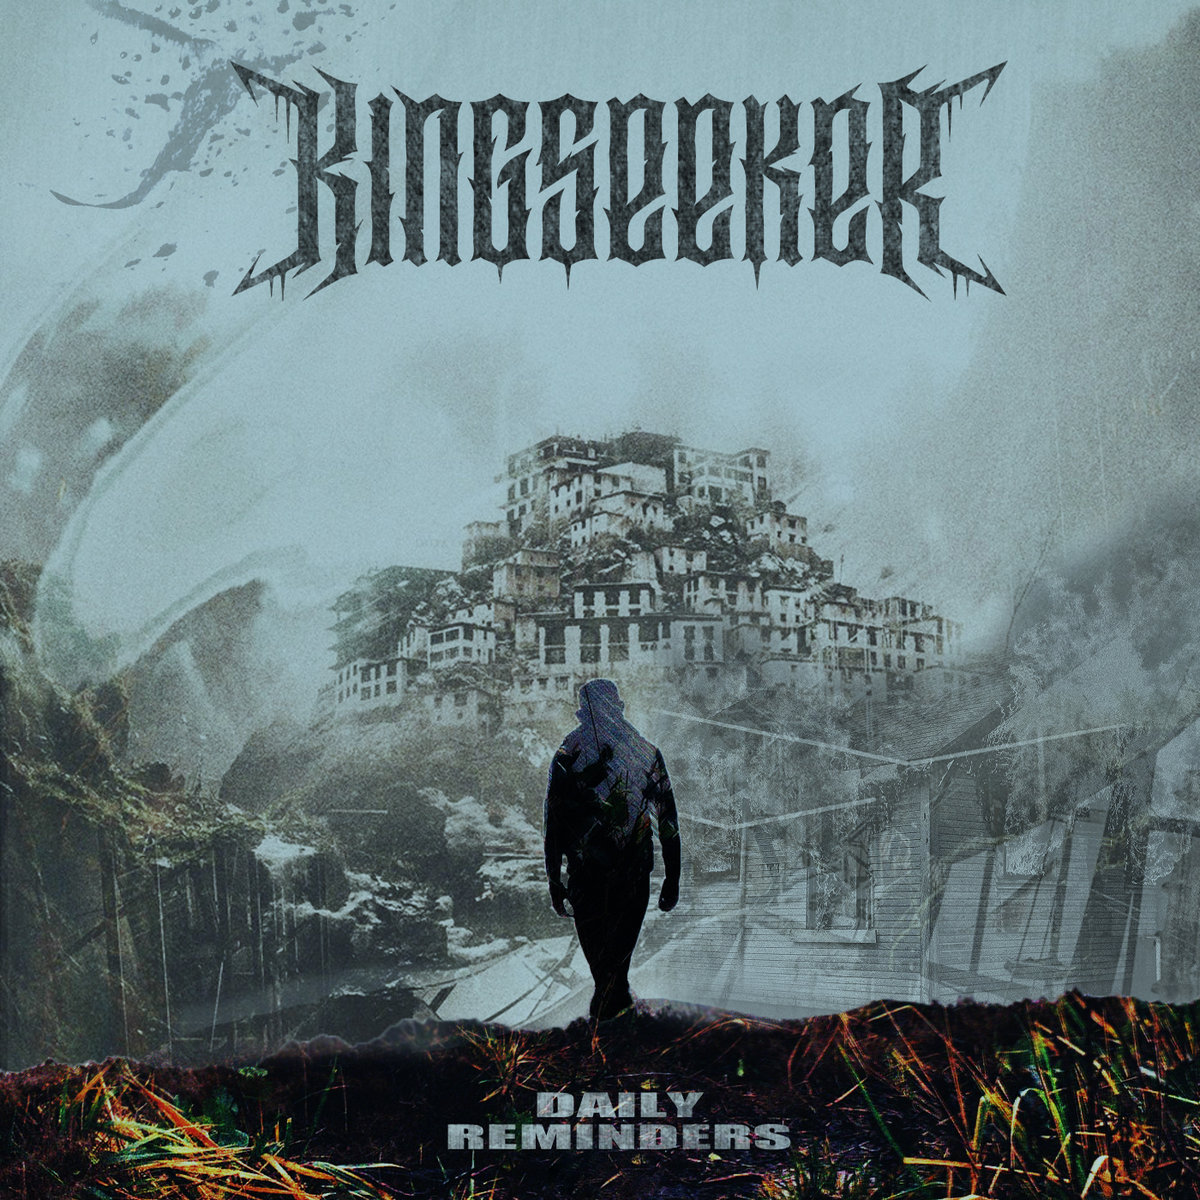 Review: “Daily Reminders” by Kingseeker – Metal Noise